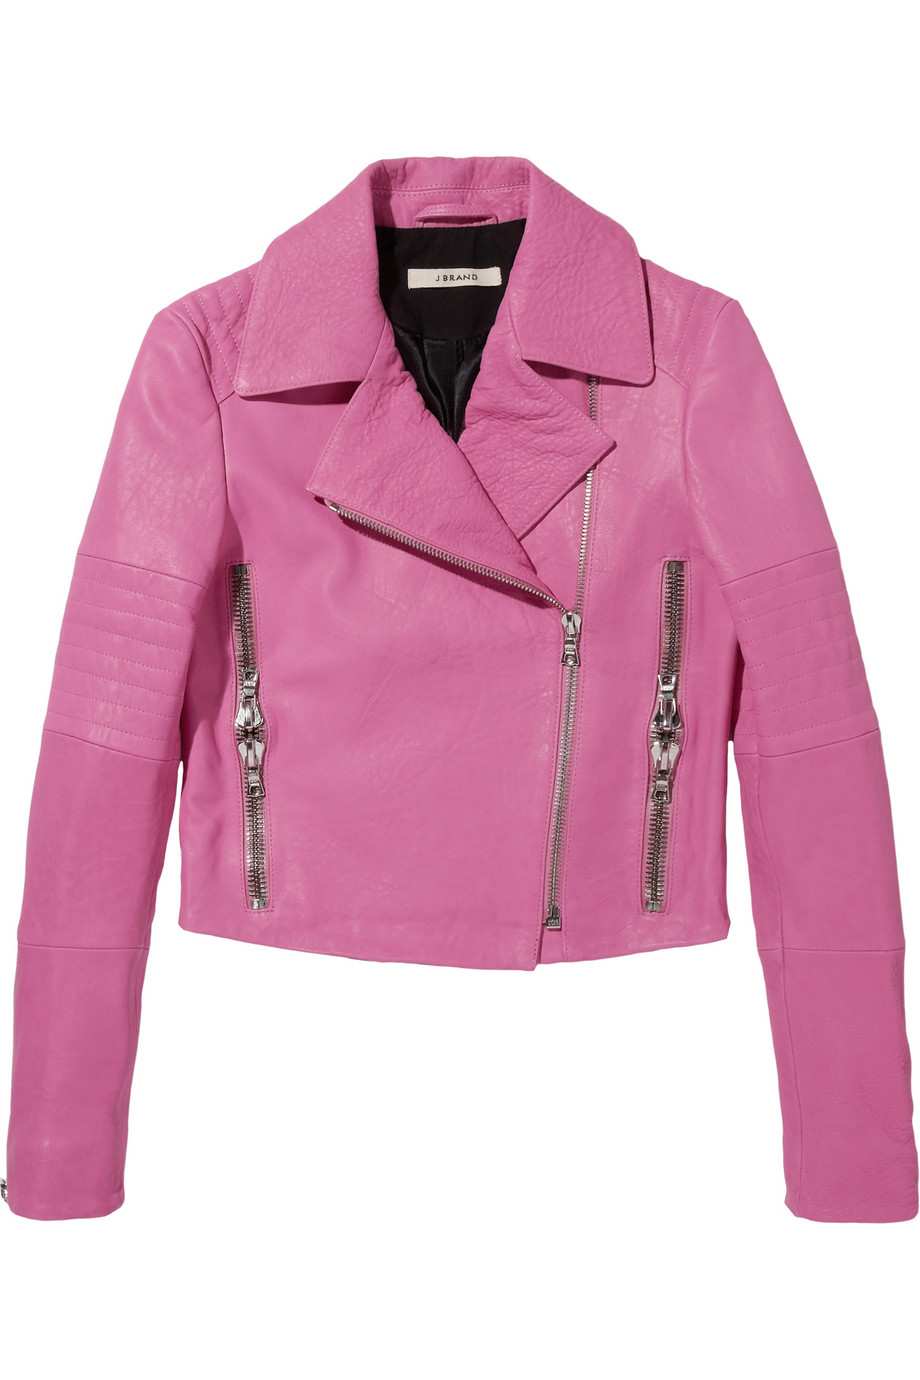 Lyst - J Brand Aiah Leather Biker Jacket in Pink